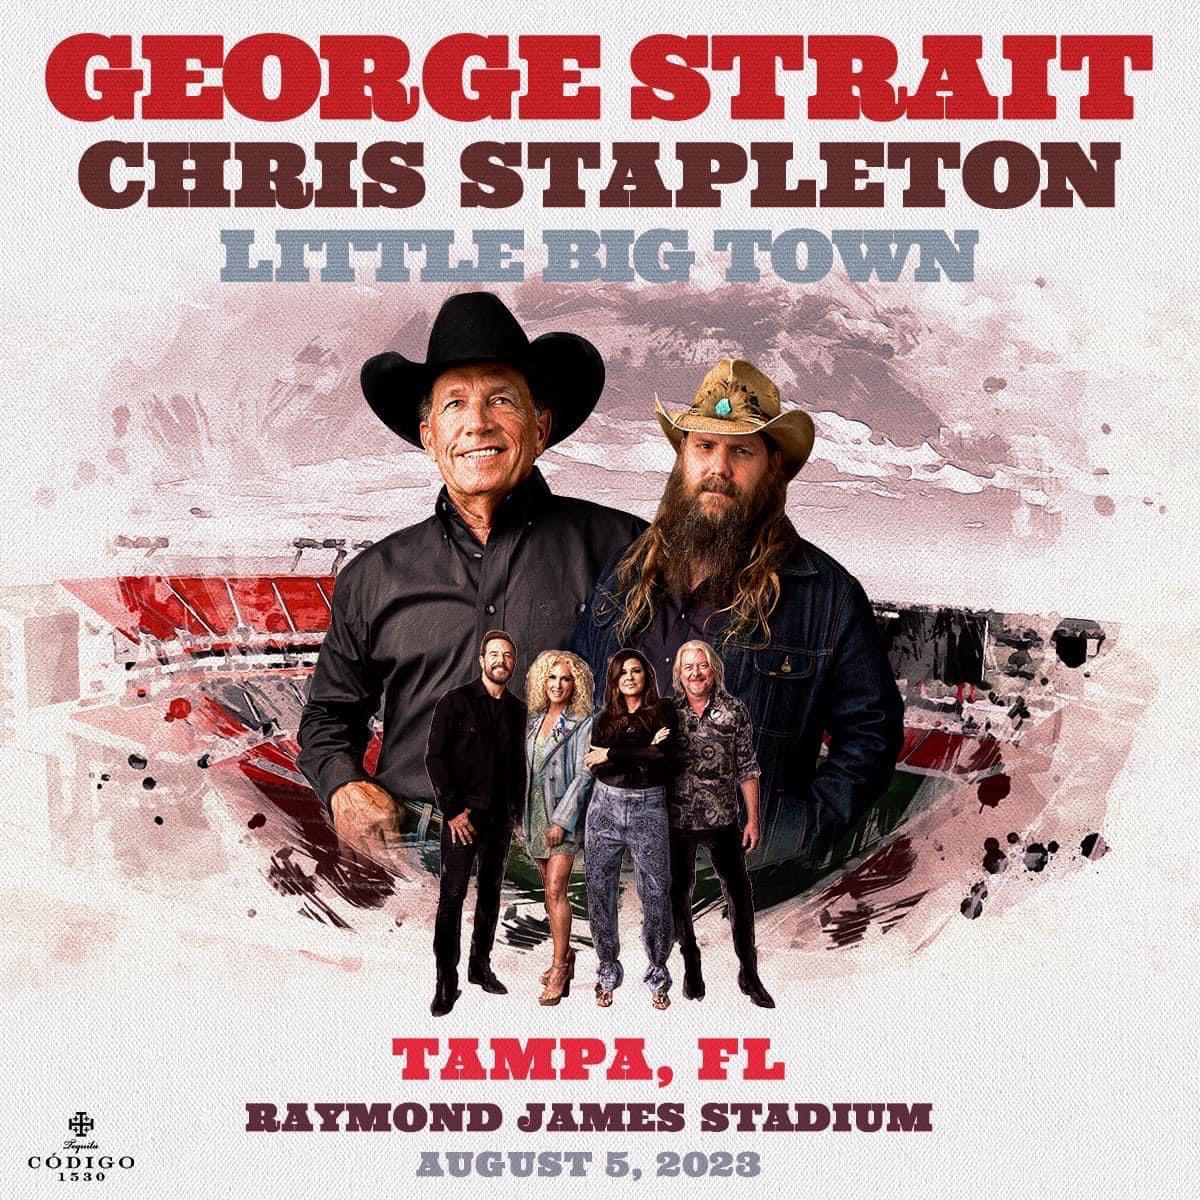 George Strait, Chris Stapleton, Little Big Town - Tampa